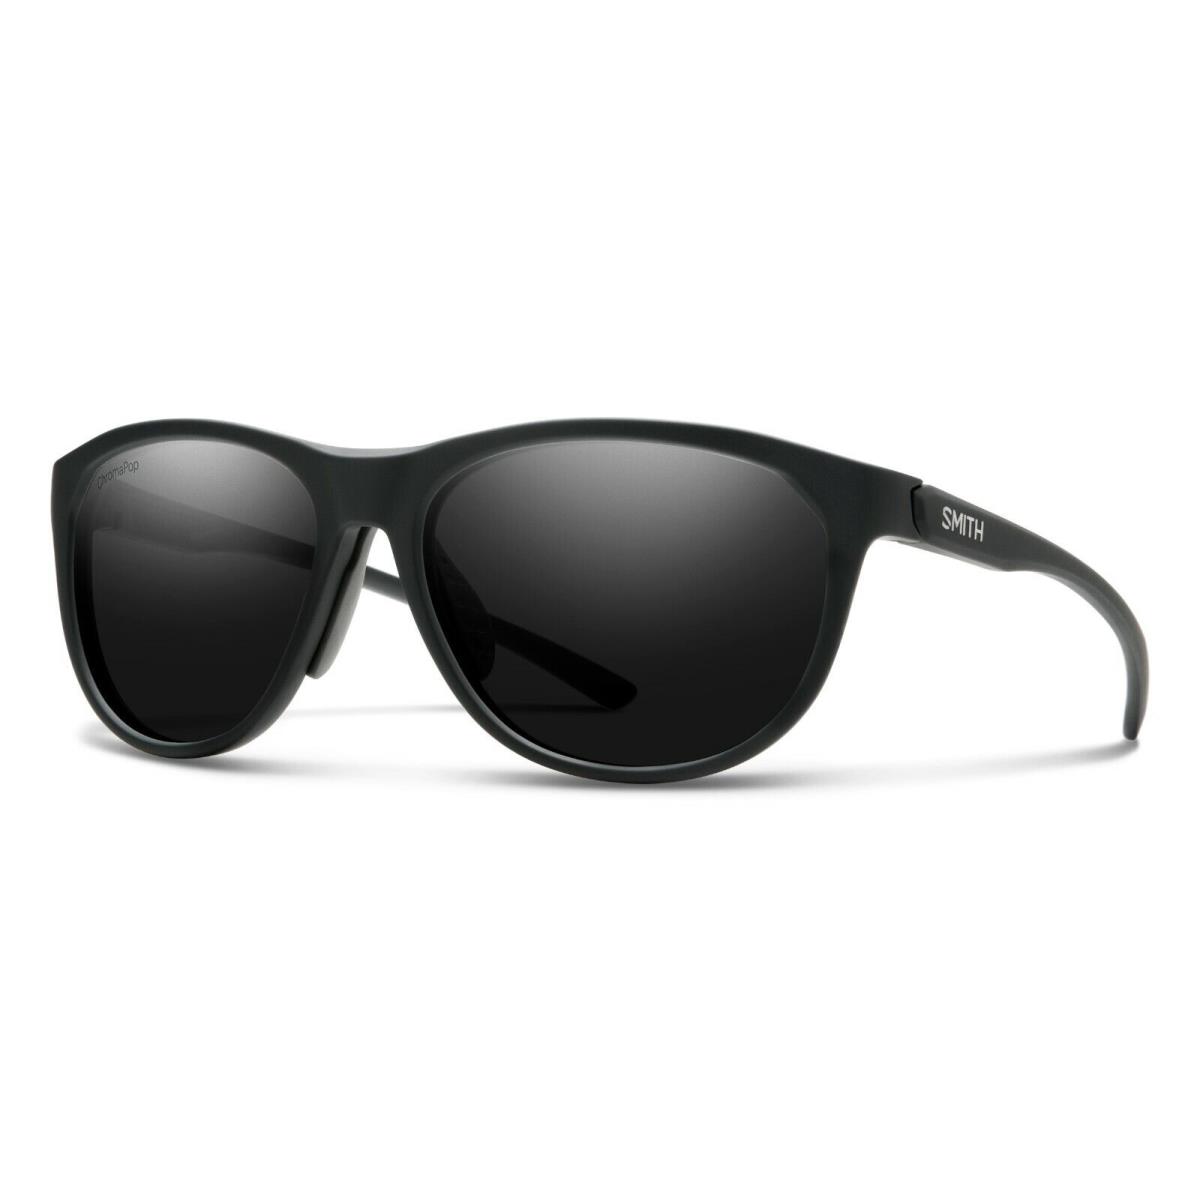 Smith Optics Uproar Sunglasses Chromapop Matte Black-polarized Black - Black